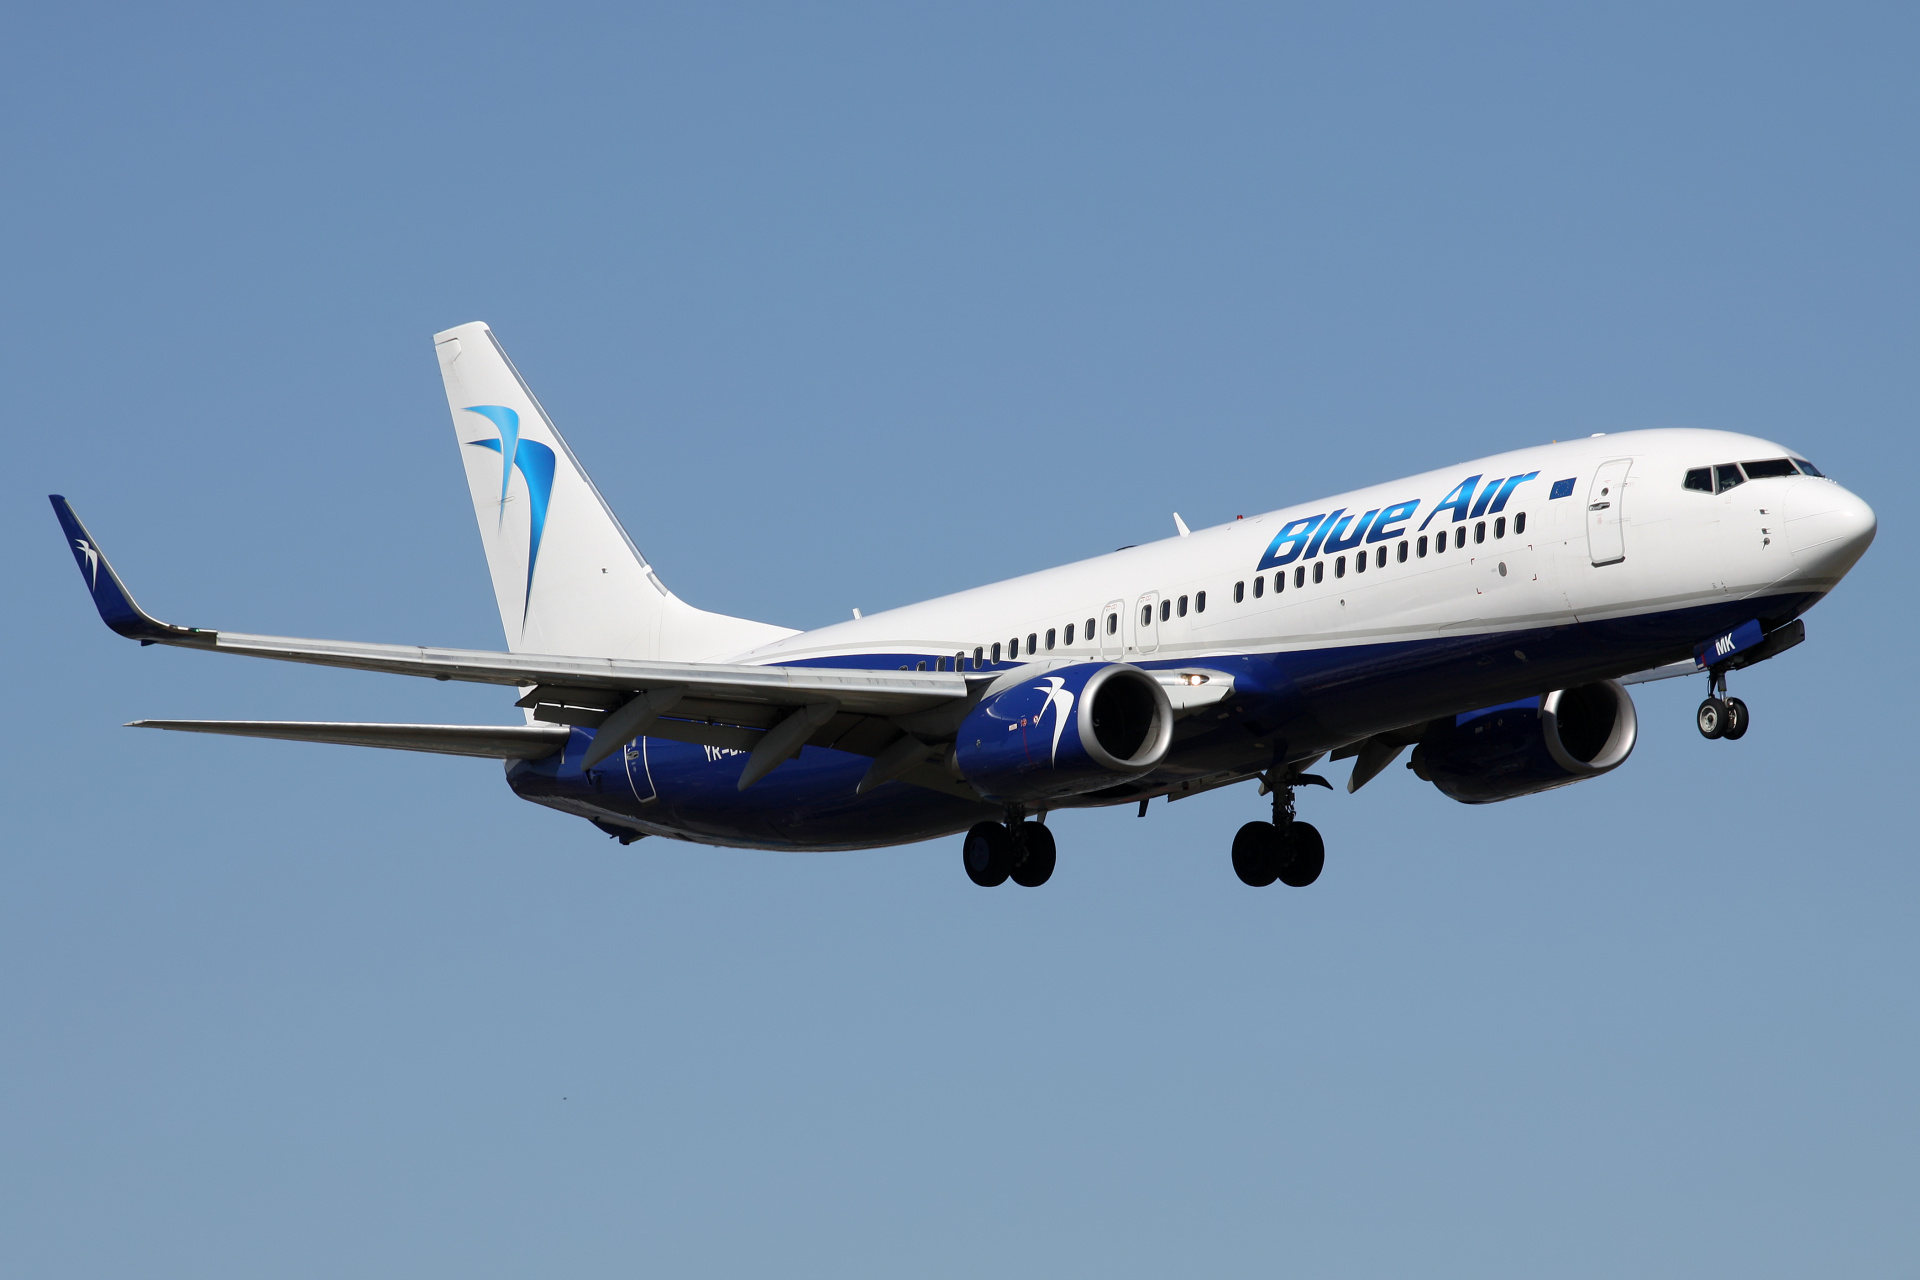 YR-BMK (Aircraft » EPWA Spotting » Boeing 737-800 » Blue Air)